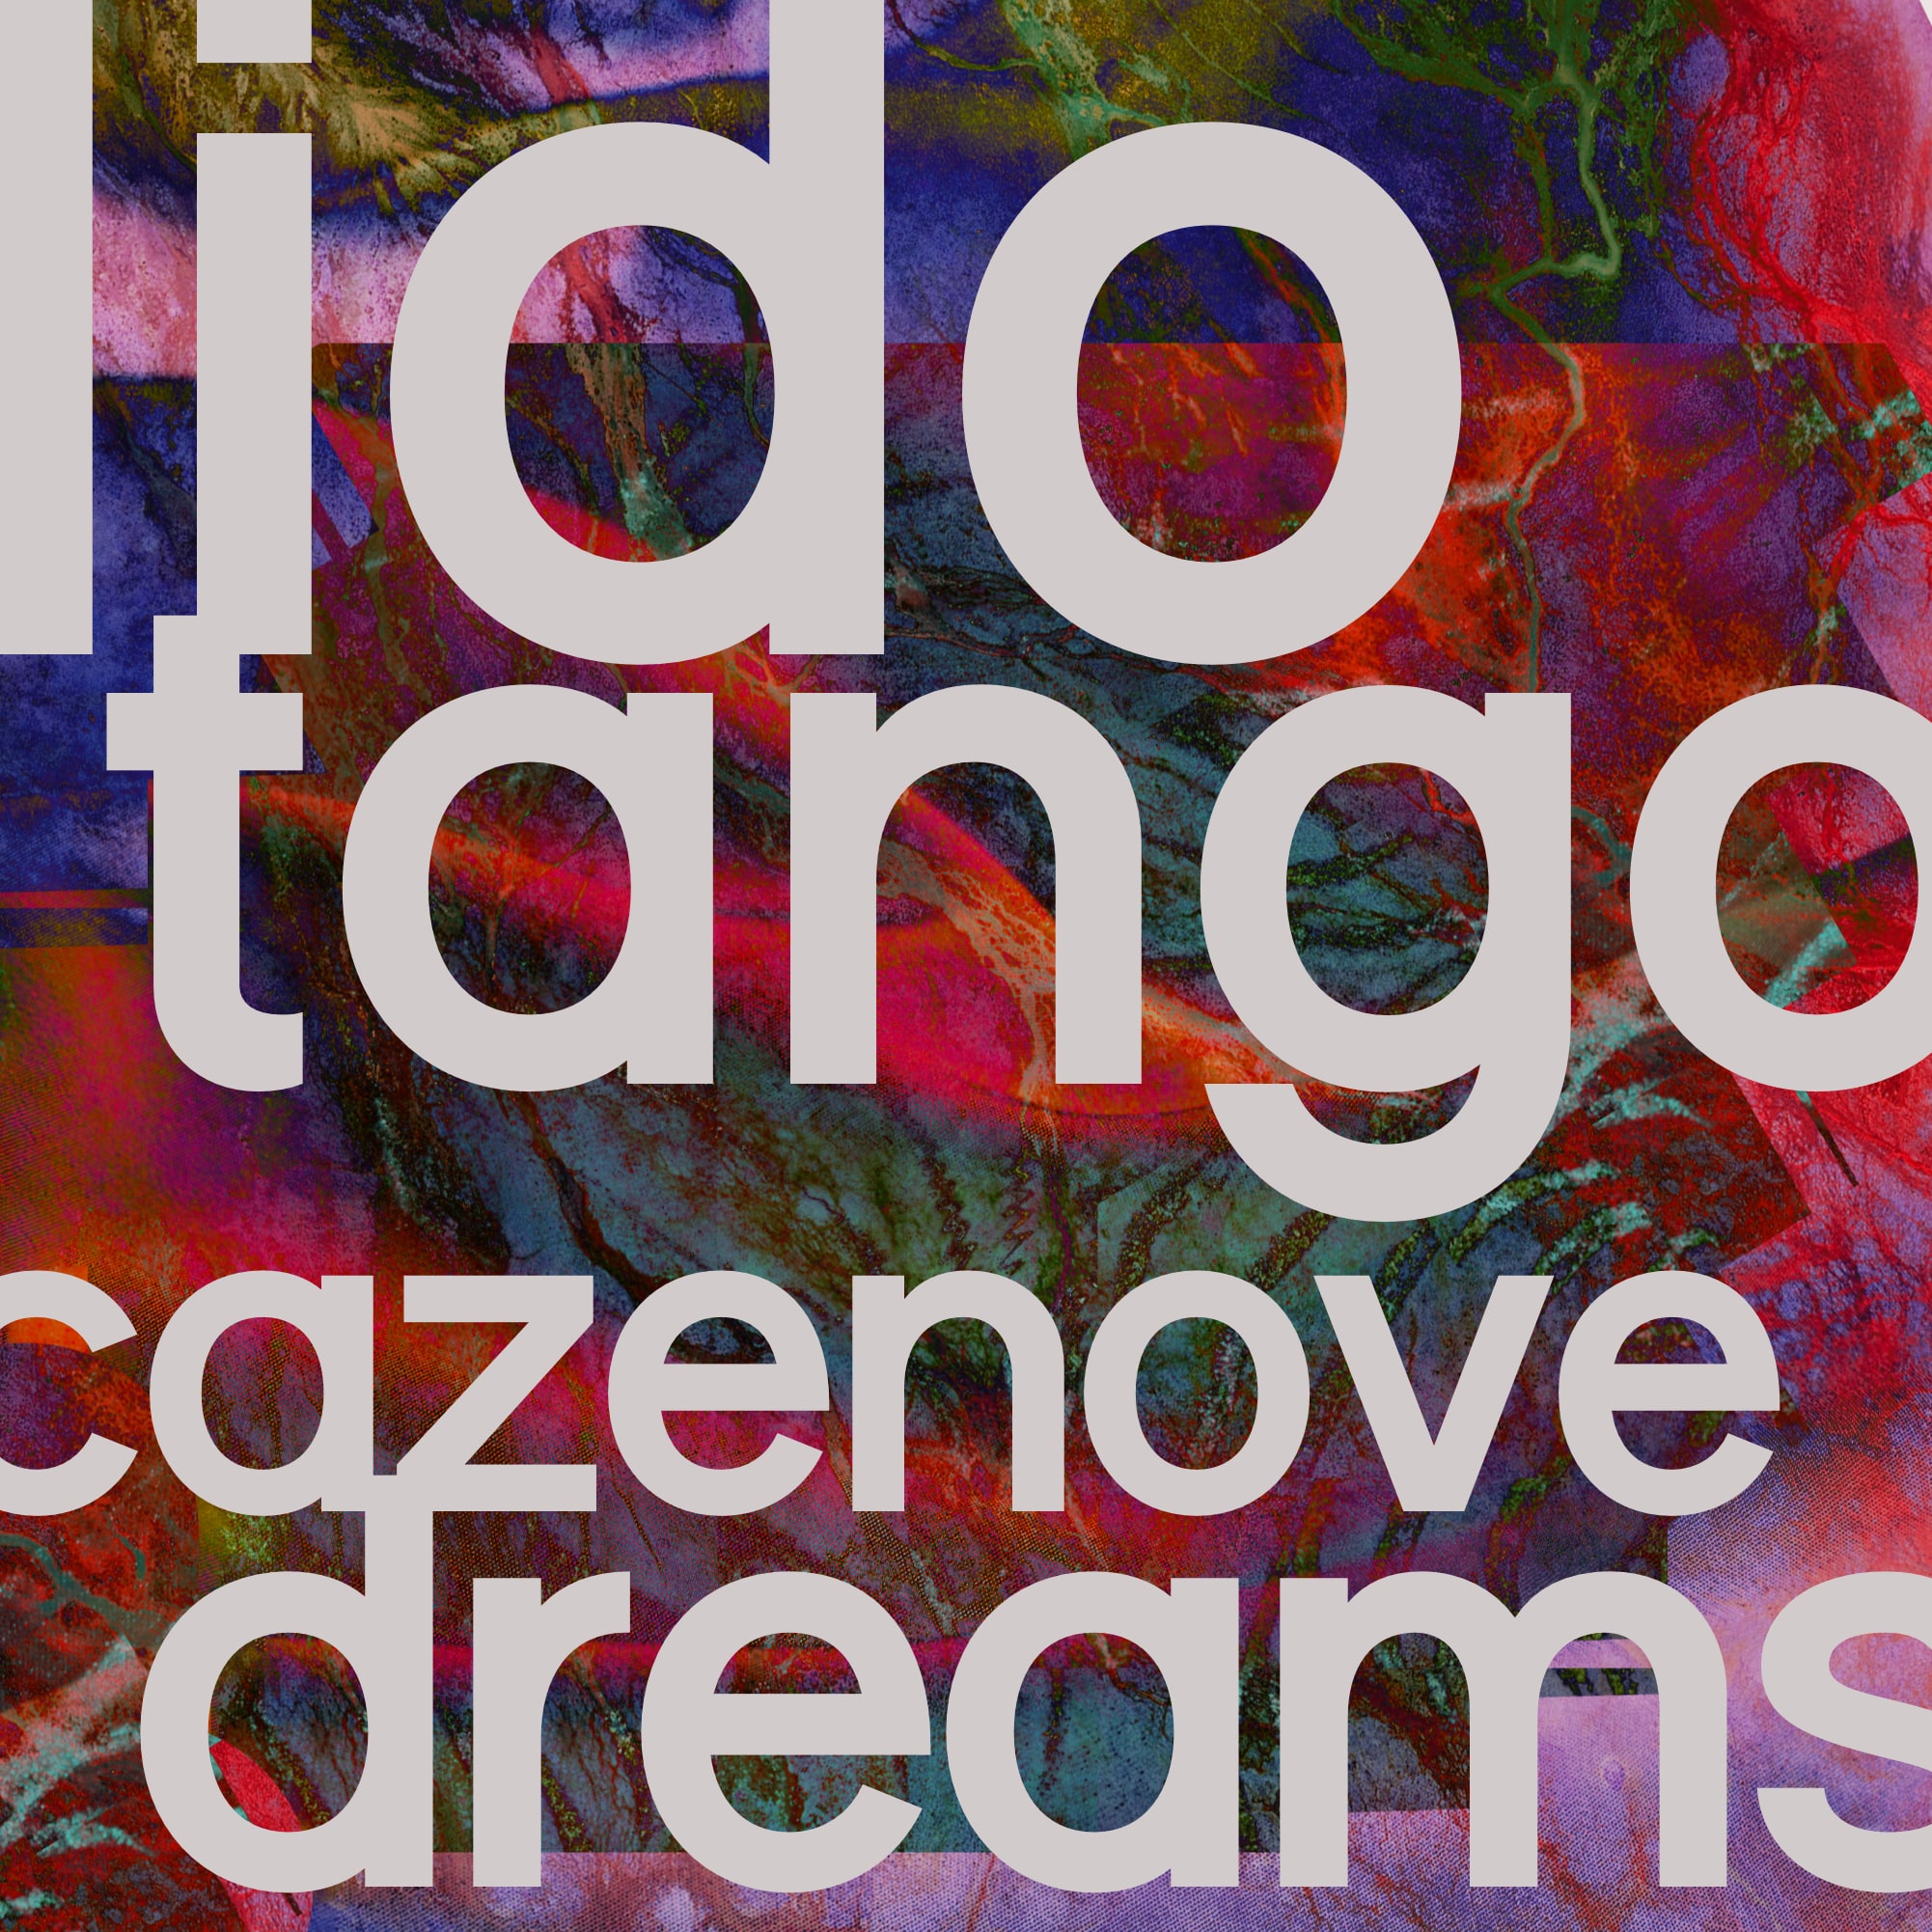 Instamatic Lido Tango (Cazenove Dreams) (Bicep vs Fleetwood Mac) tango in the night mashup bastard pop crumplbangers challenge bastard pop blend cover